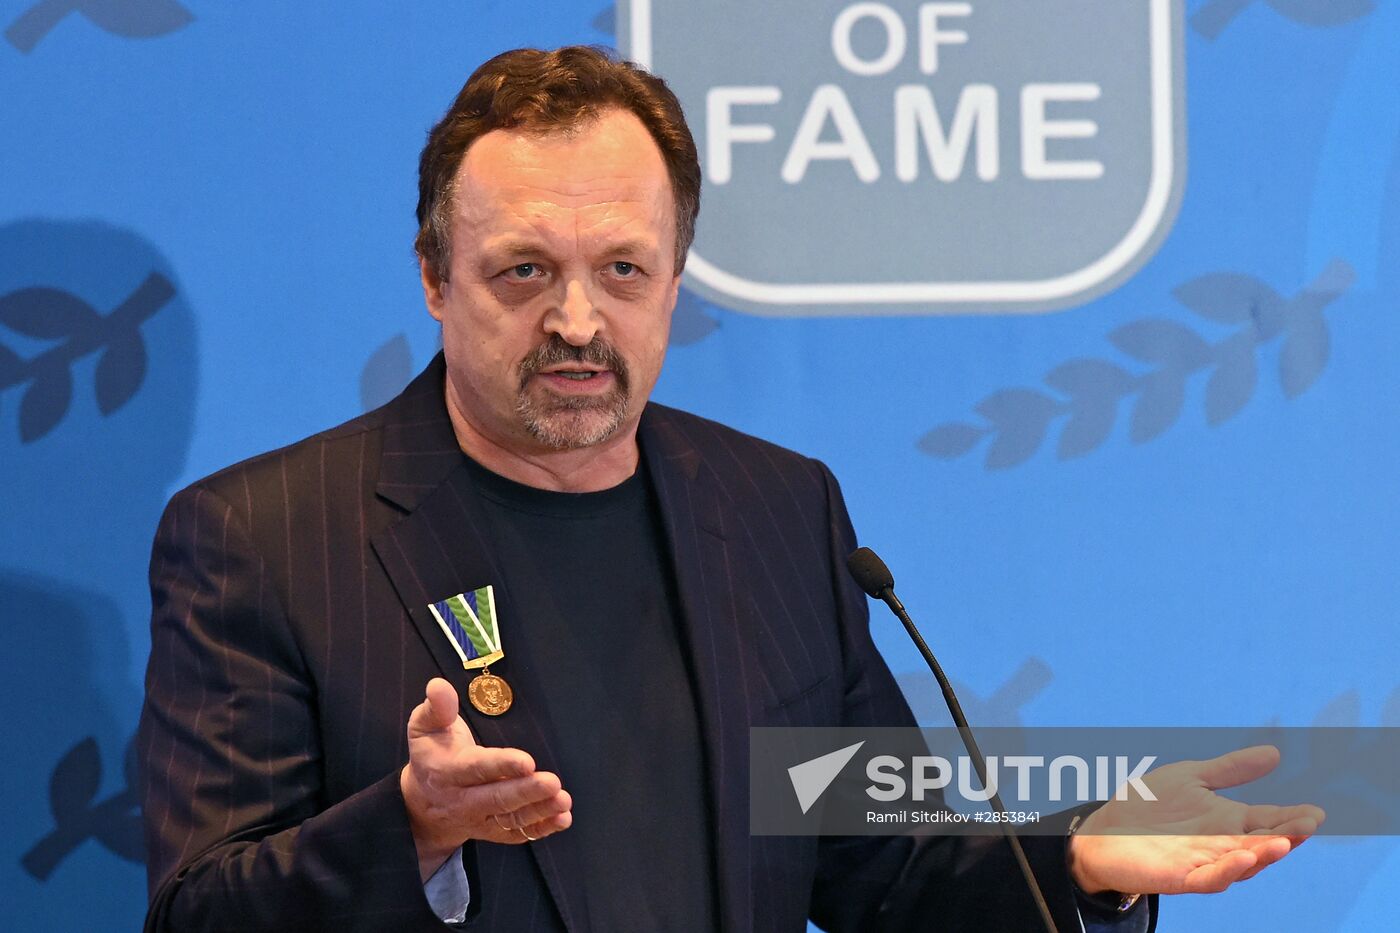 IIHF Hall of Fame Induction Ceremony